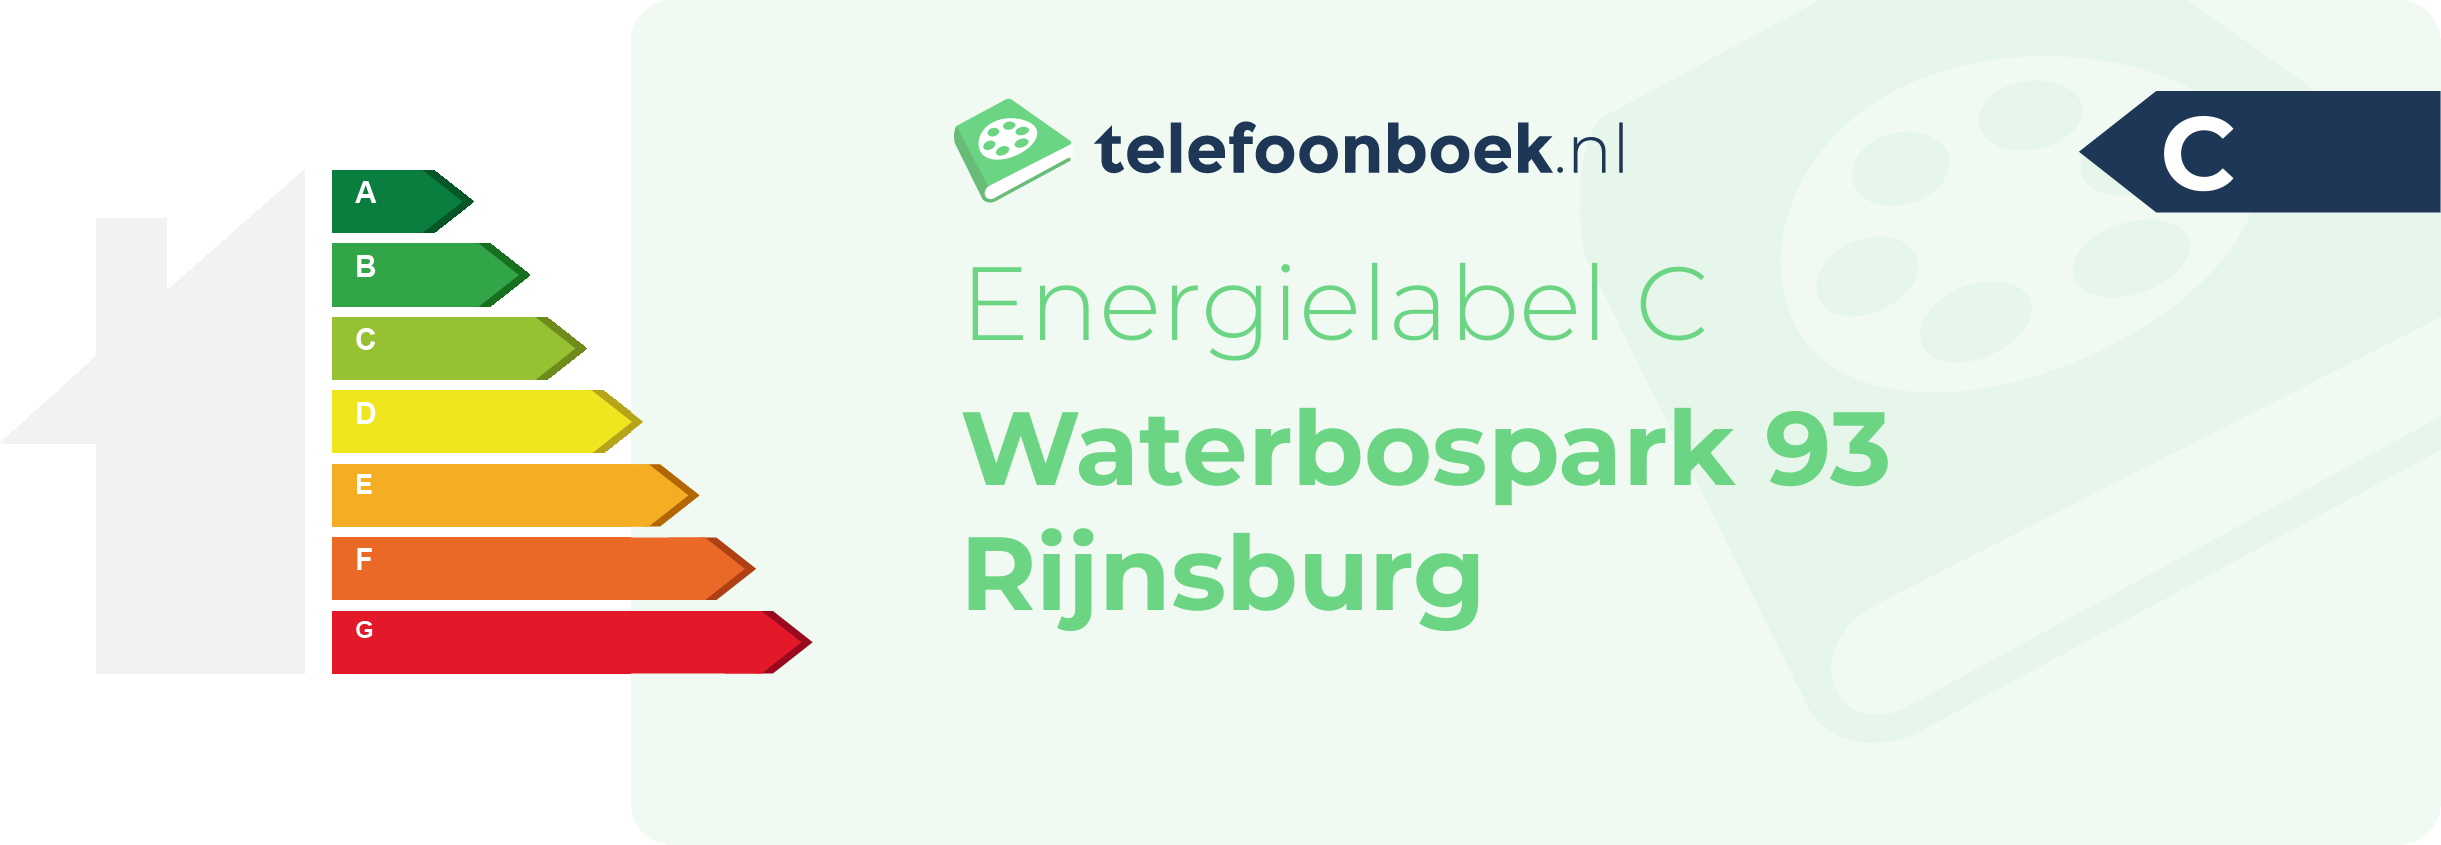 Energielabel Waterbospark 93 Rijnsburg